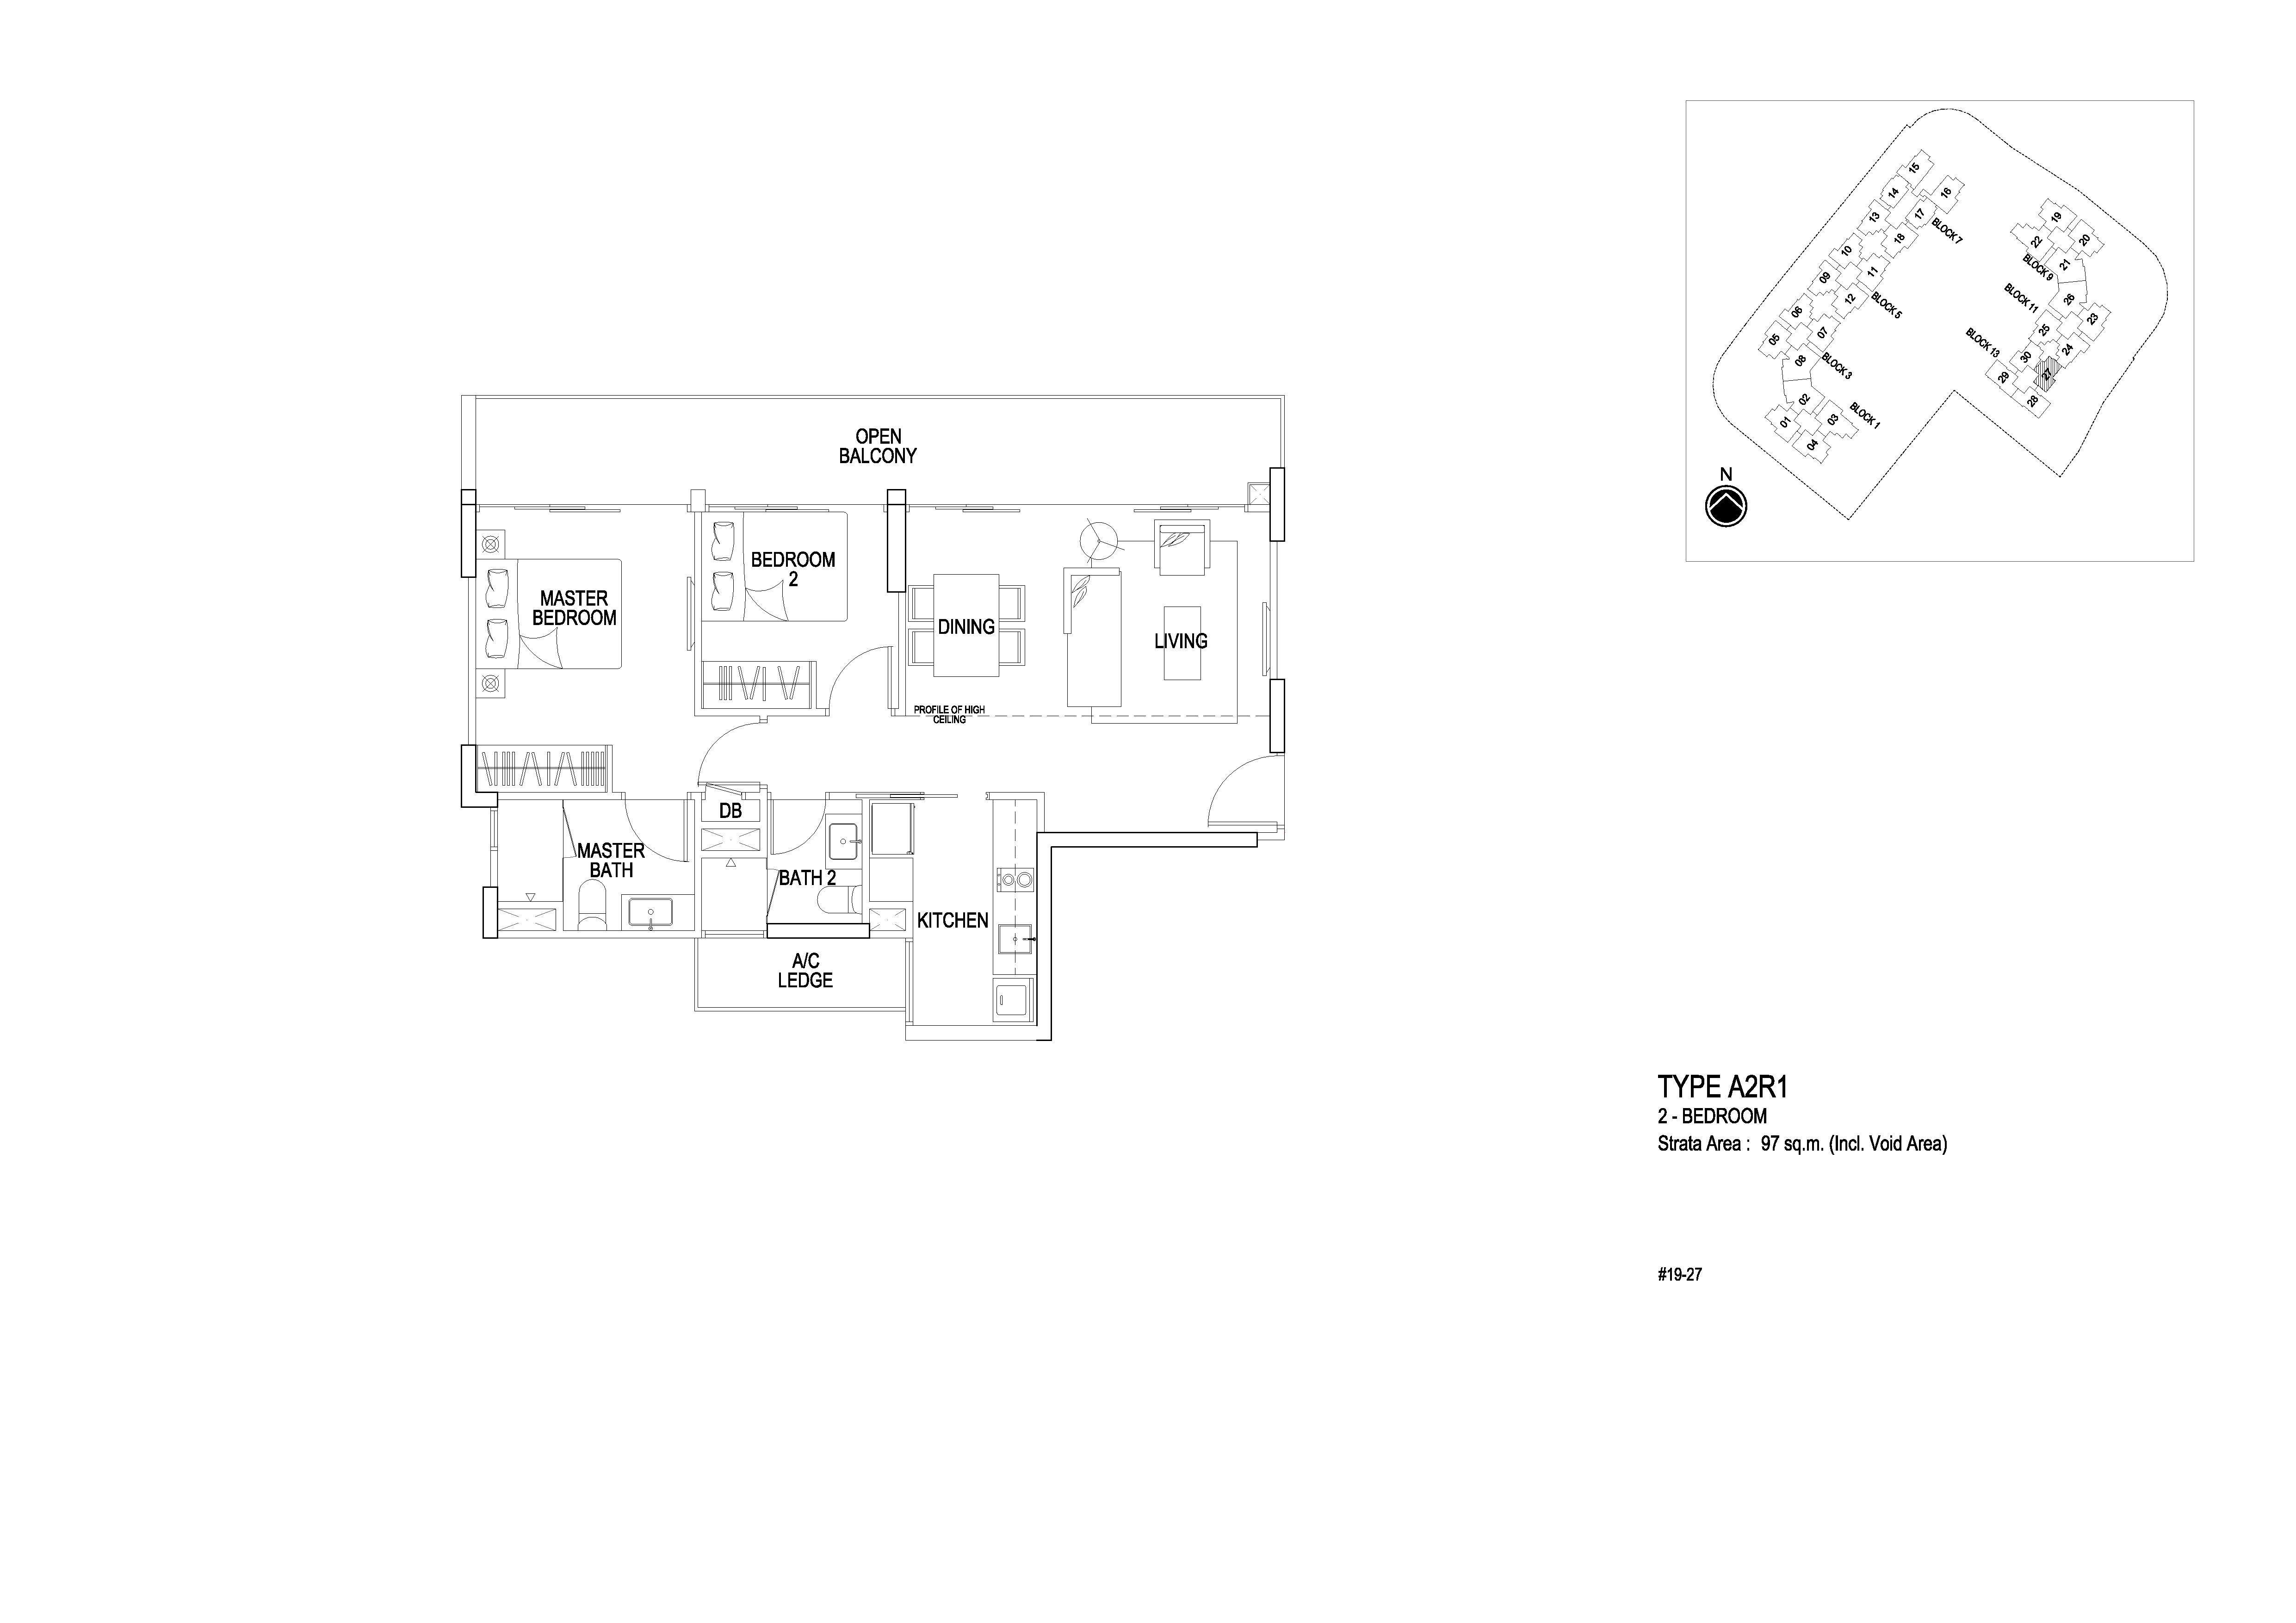 Flo Residence 2 Bedroom Roof Terrace Floor Plans Type A2R1